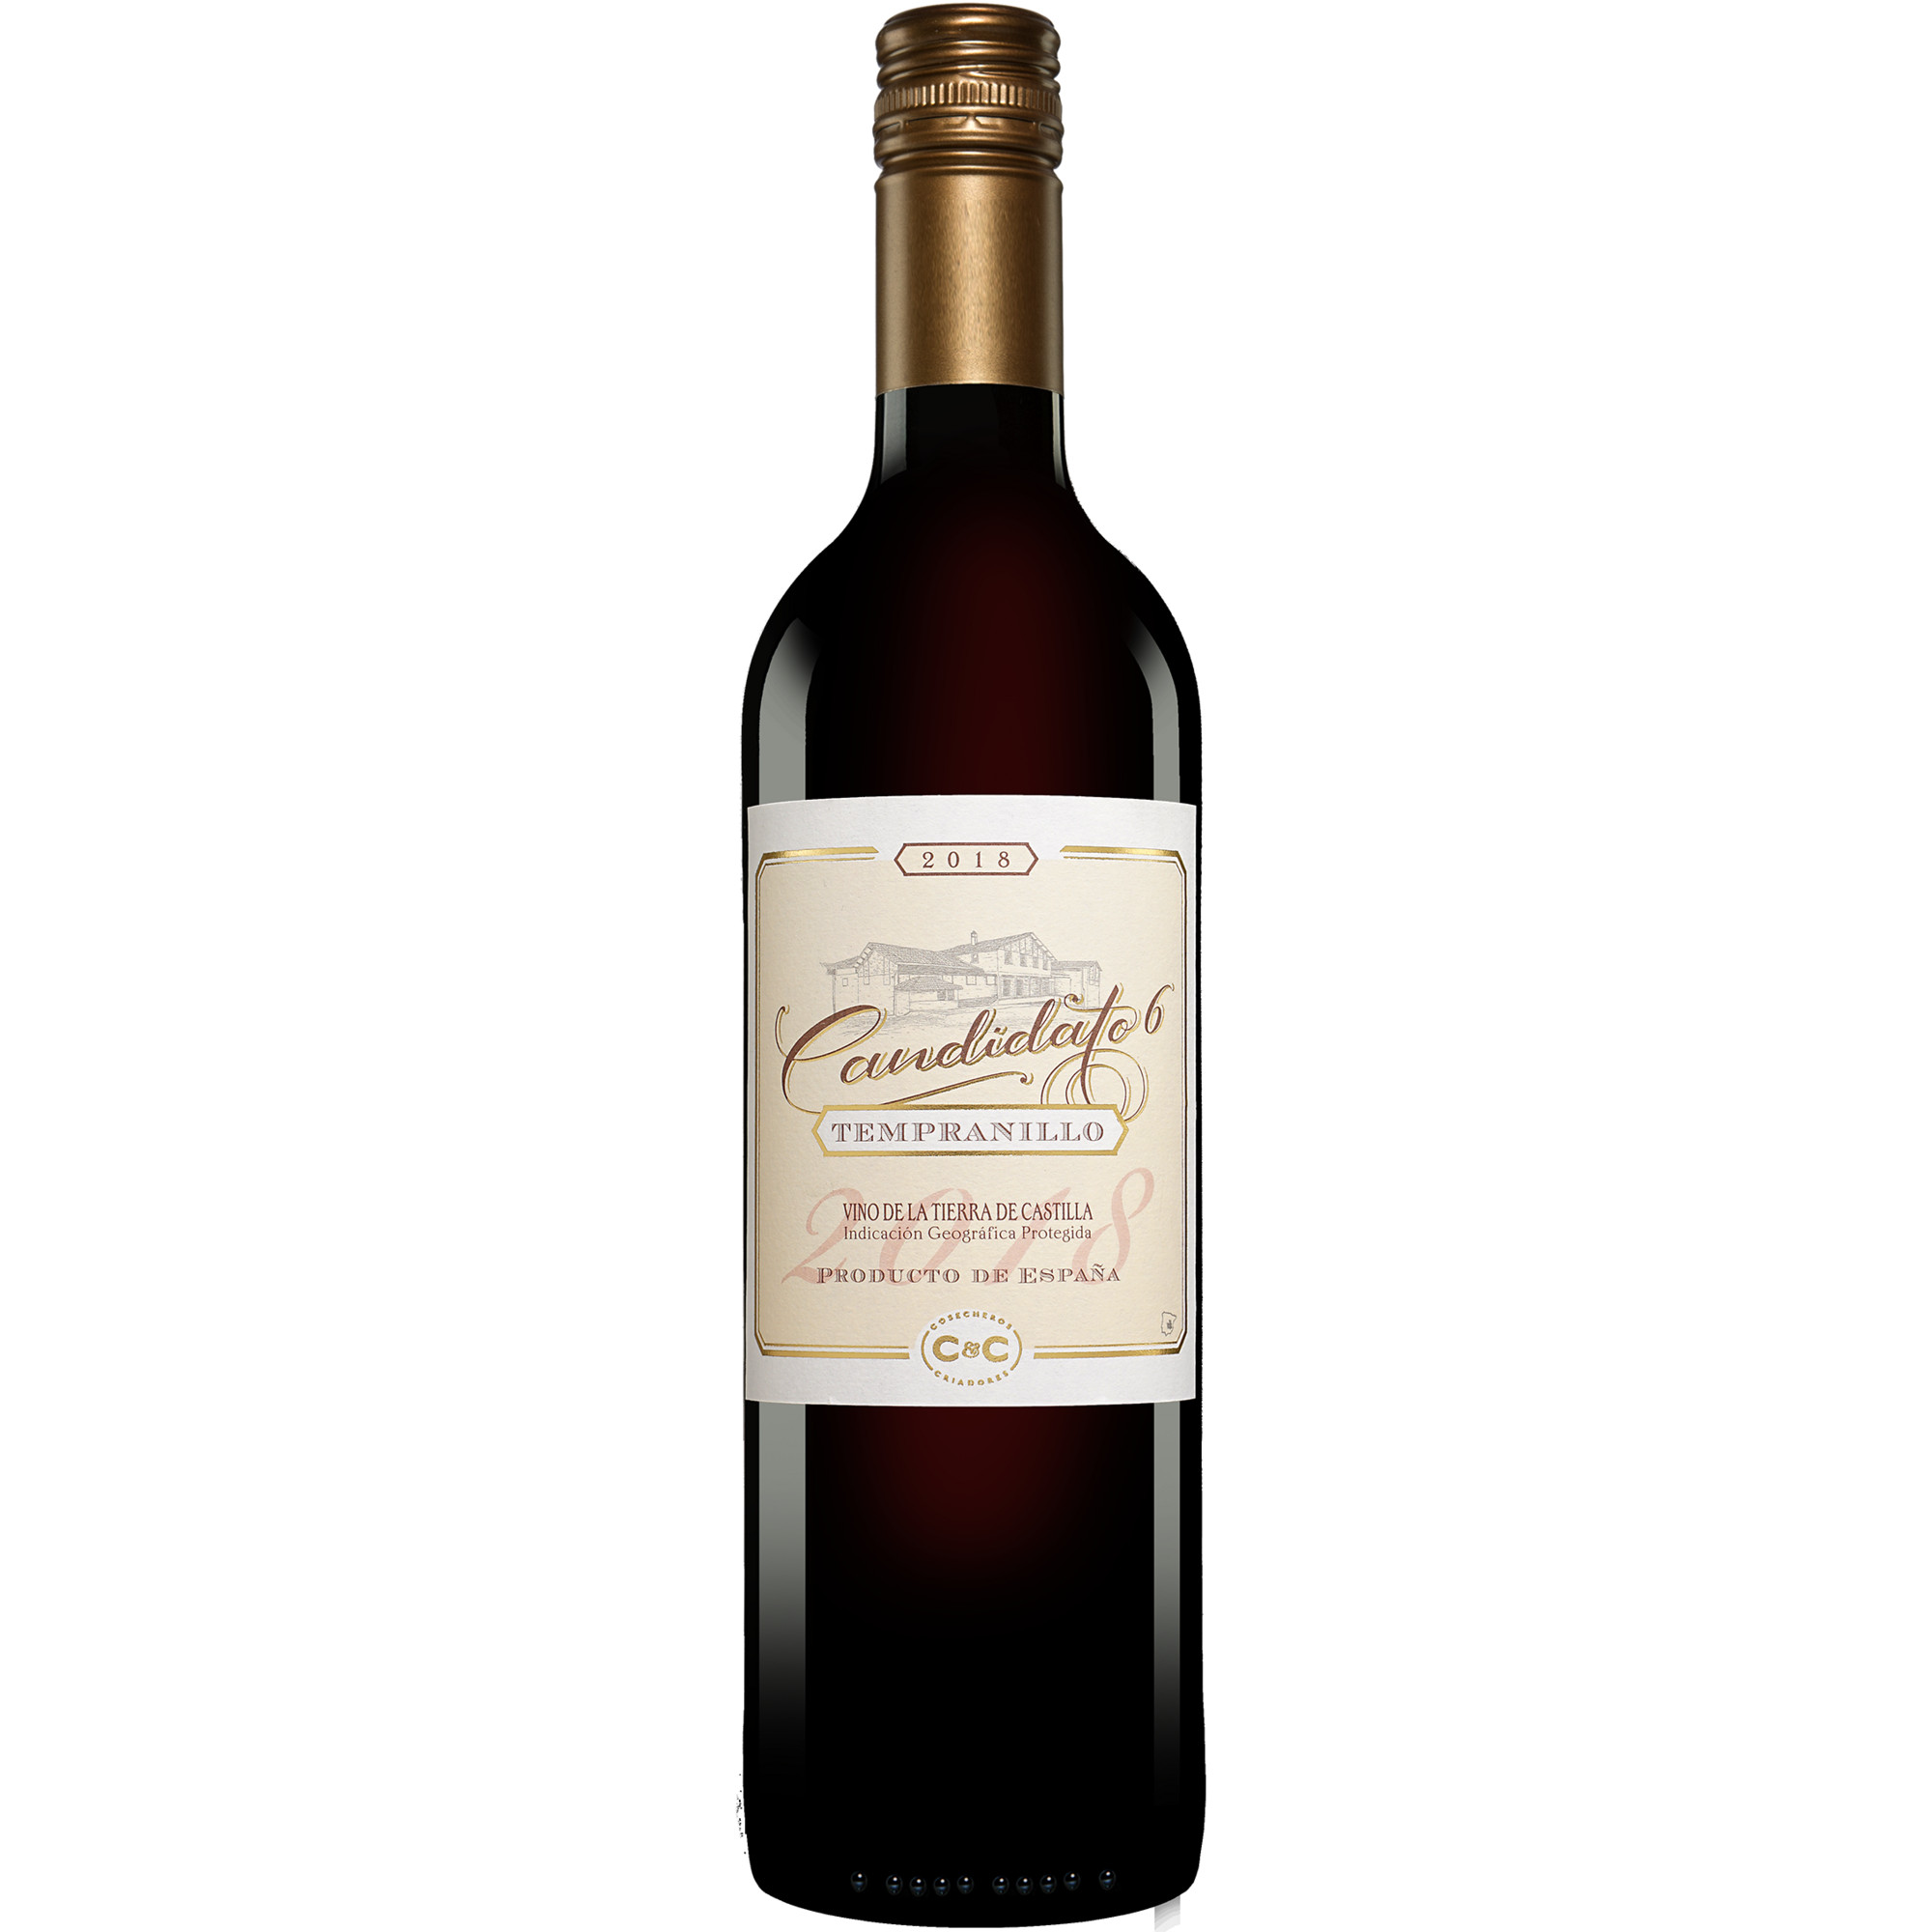 2013 & Finde für Preis AOP - Château Original-Holzkiste 6 - den x Pessac-Léognan Clement 0,75-l-Flasche Spirituosen Wein Rotwein Pape trocken, besten